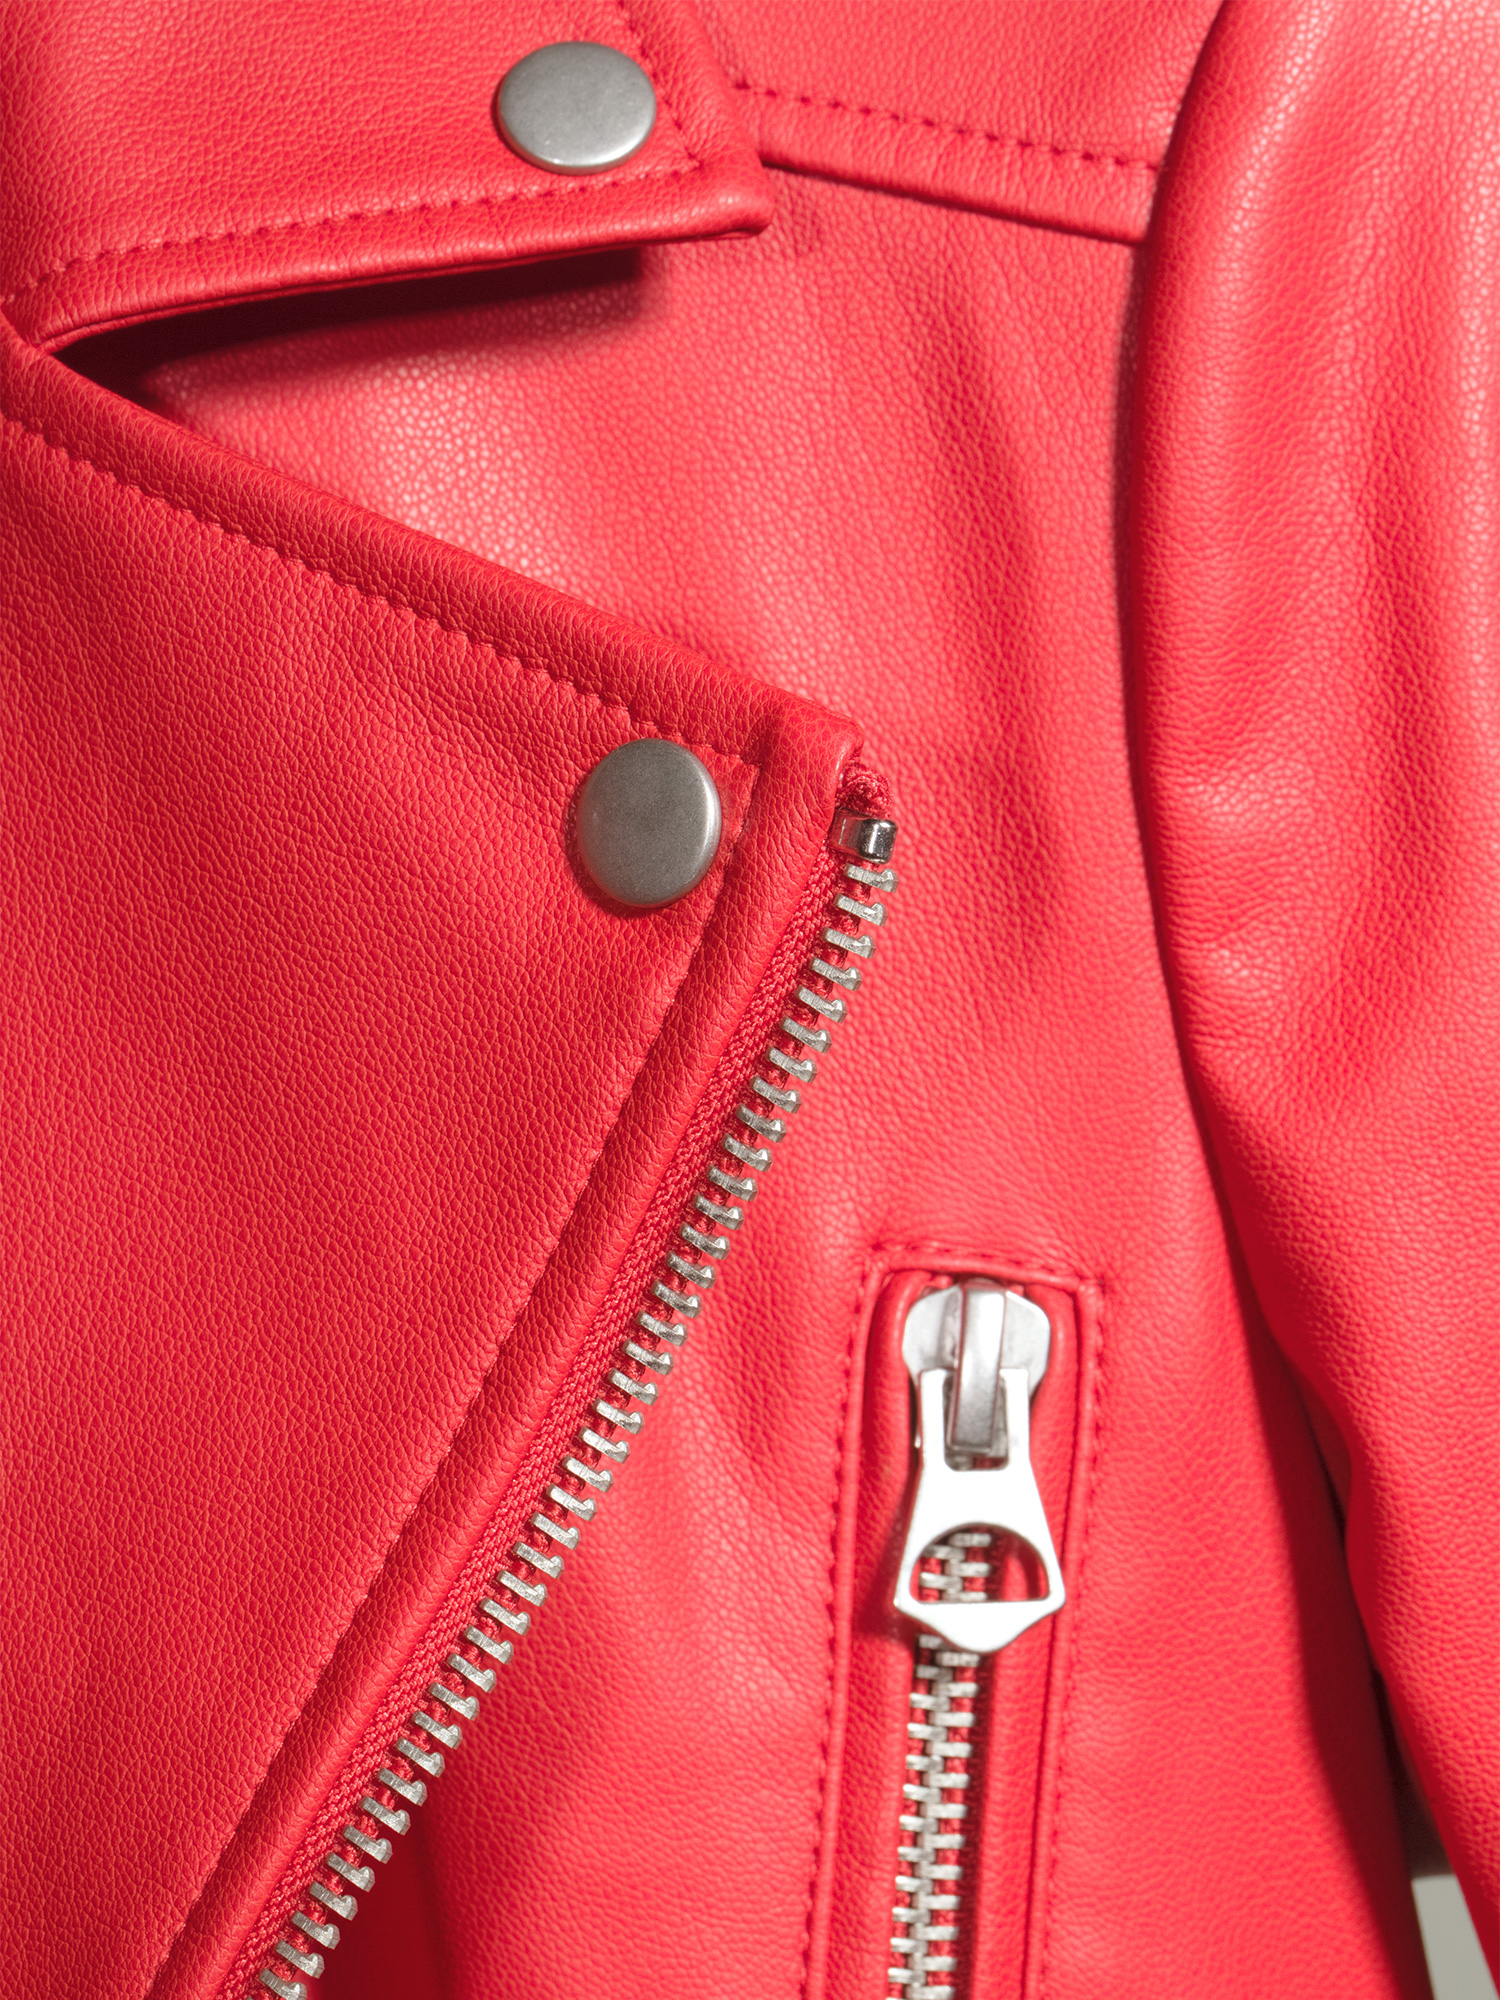 Scoop Women's Faux Leather Moto Jacket - image 2 of 6